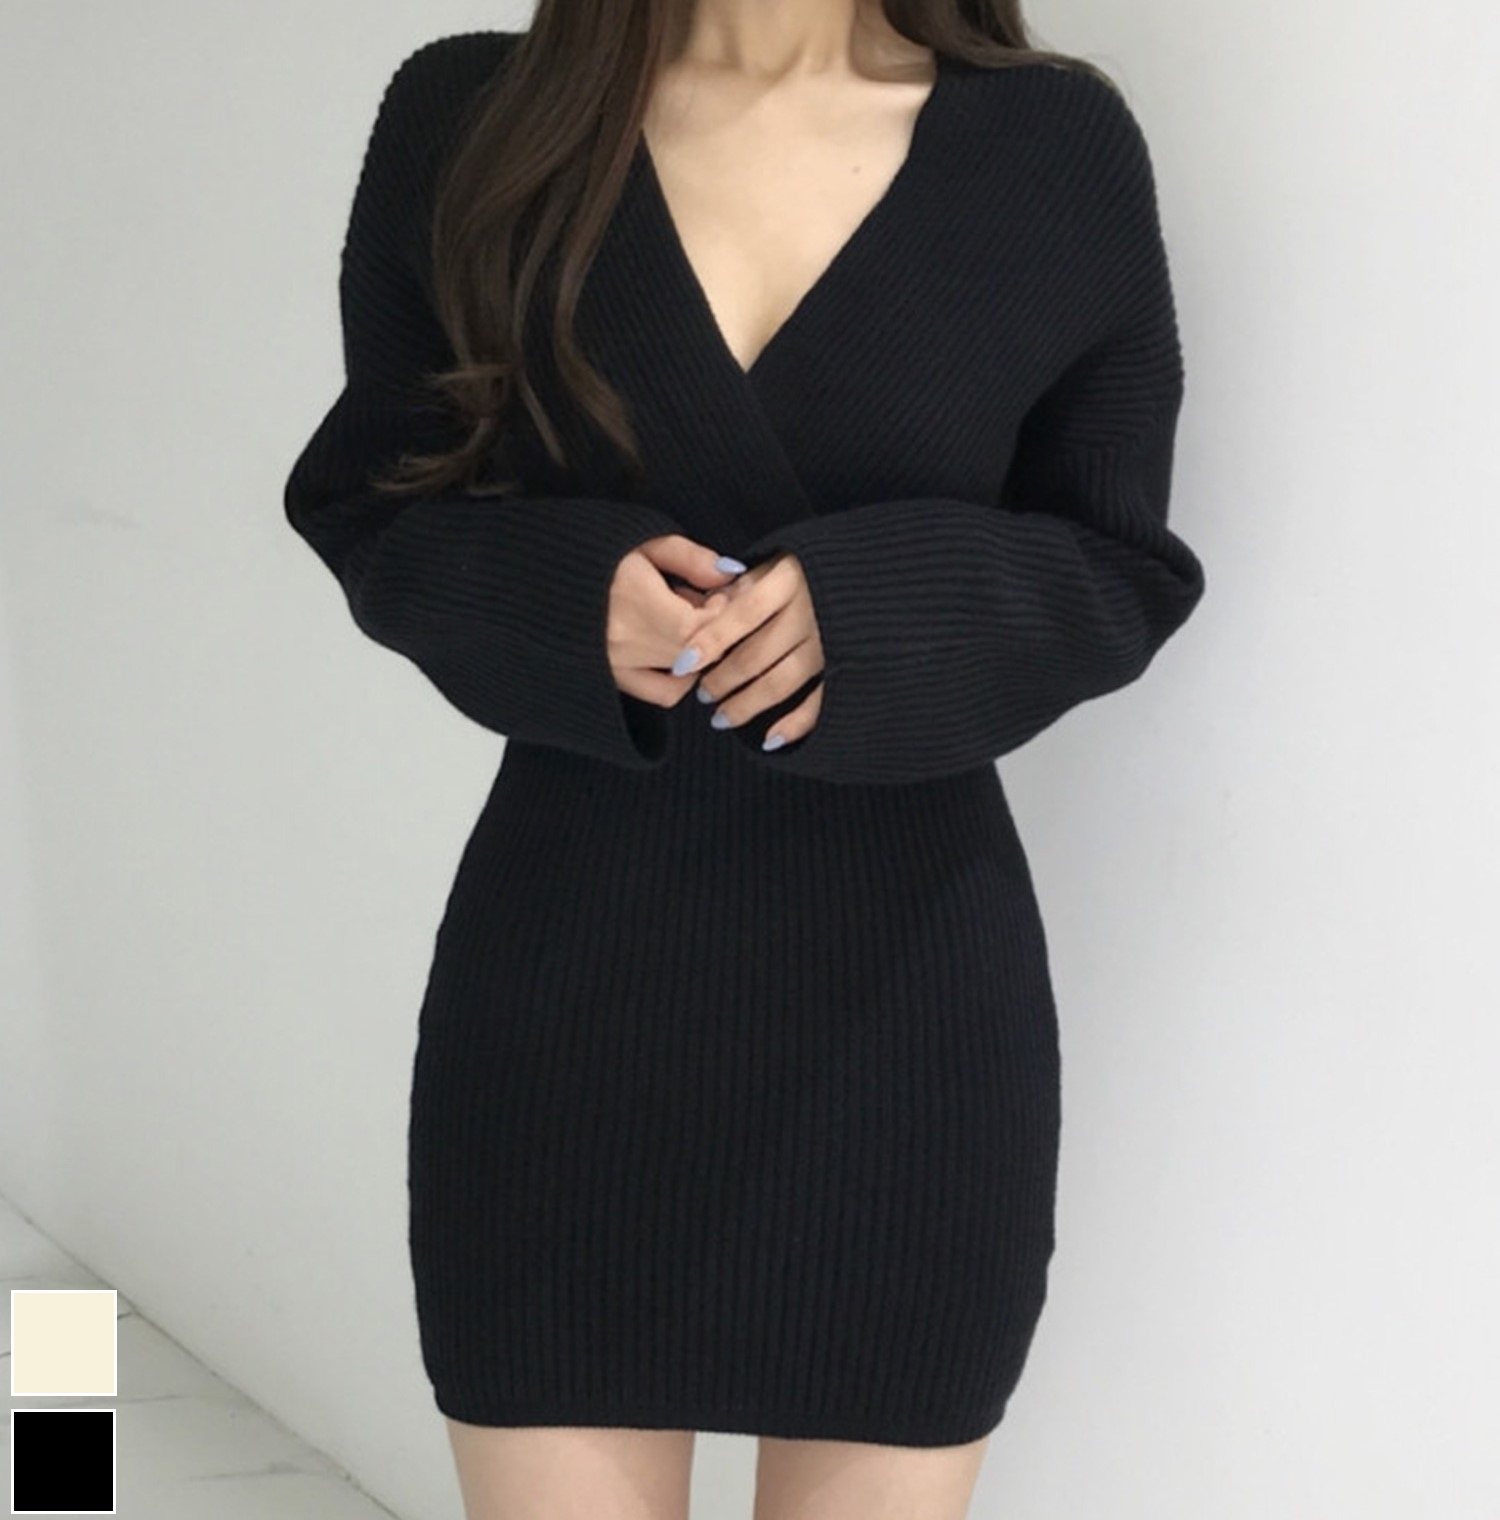 Jasmine新作 Vネックタイトニットミニワンピース 韓国ファッション ...